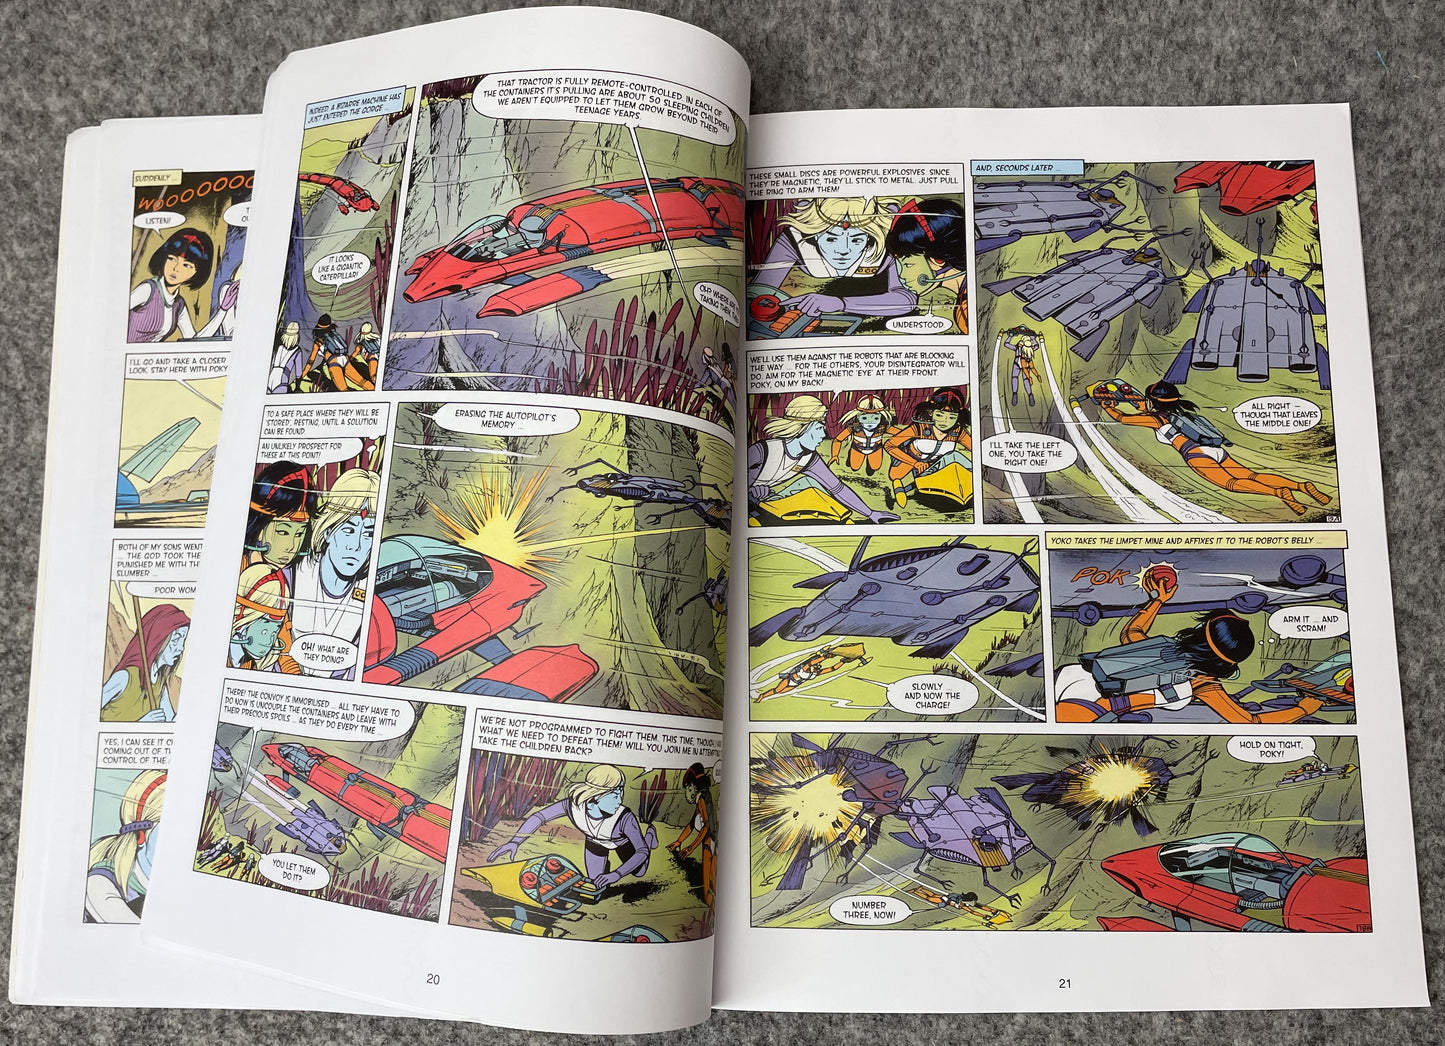 Yoko Tsuno Volume 14 - Archangels of Vinea Cinebook Paperback Comic Book by R. Leloup